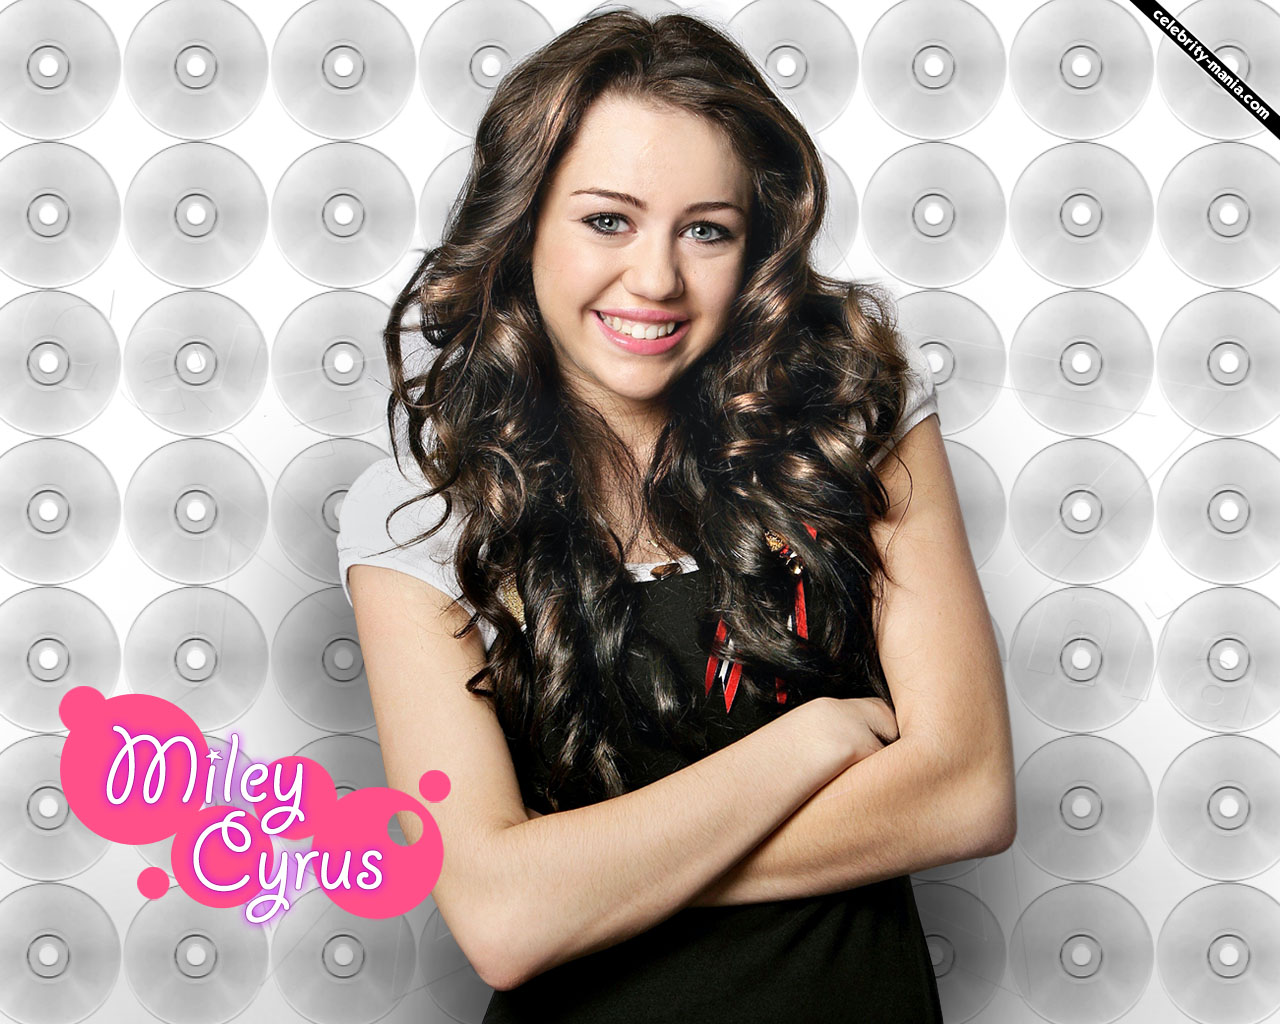 Miley S Cyrus Wallpaper